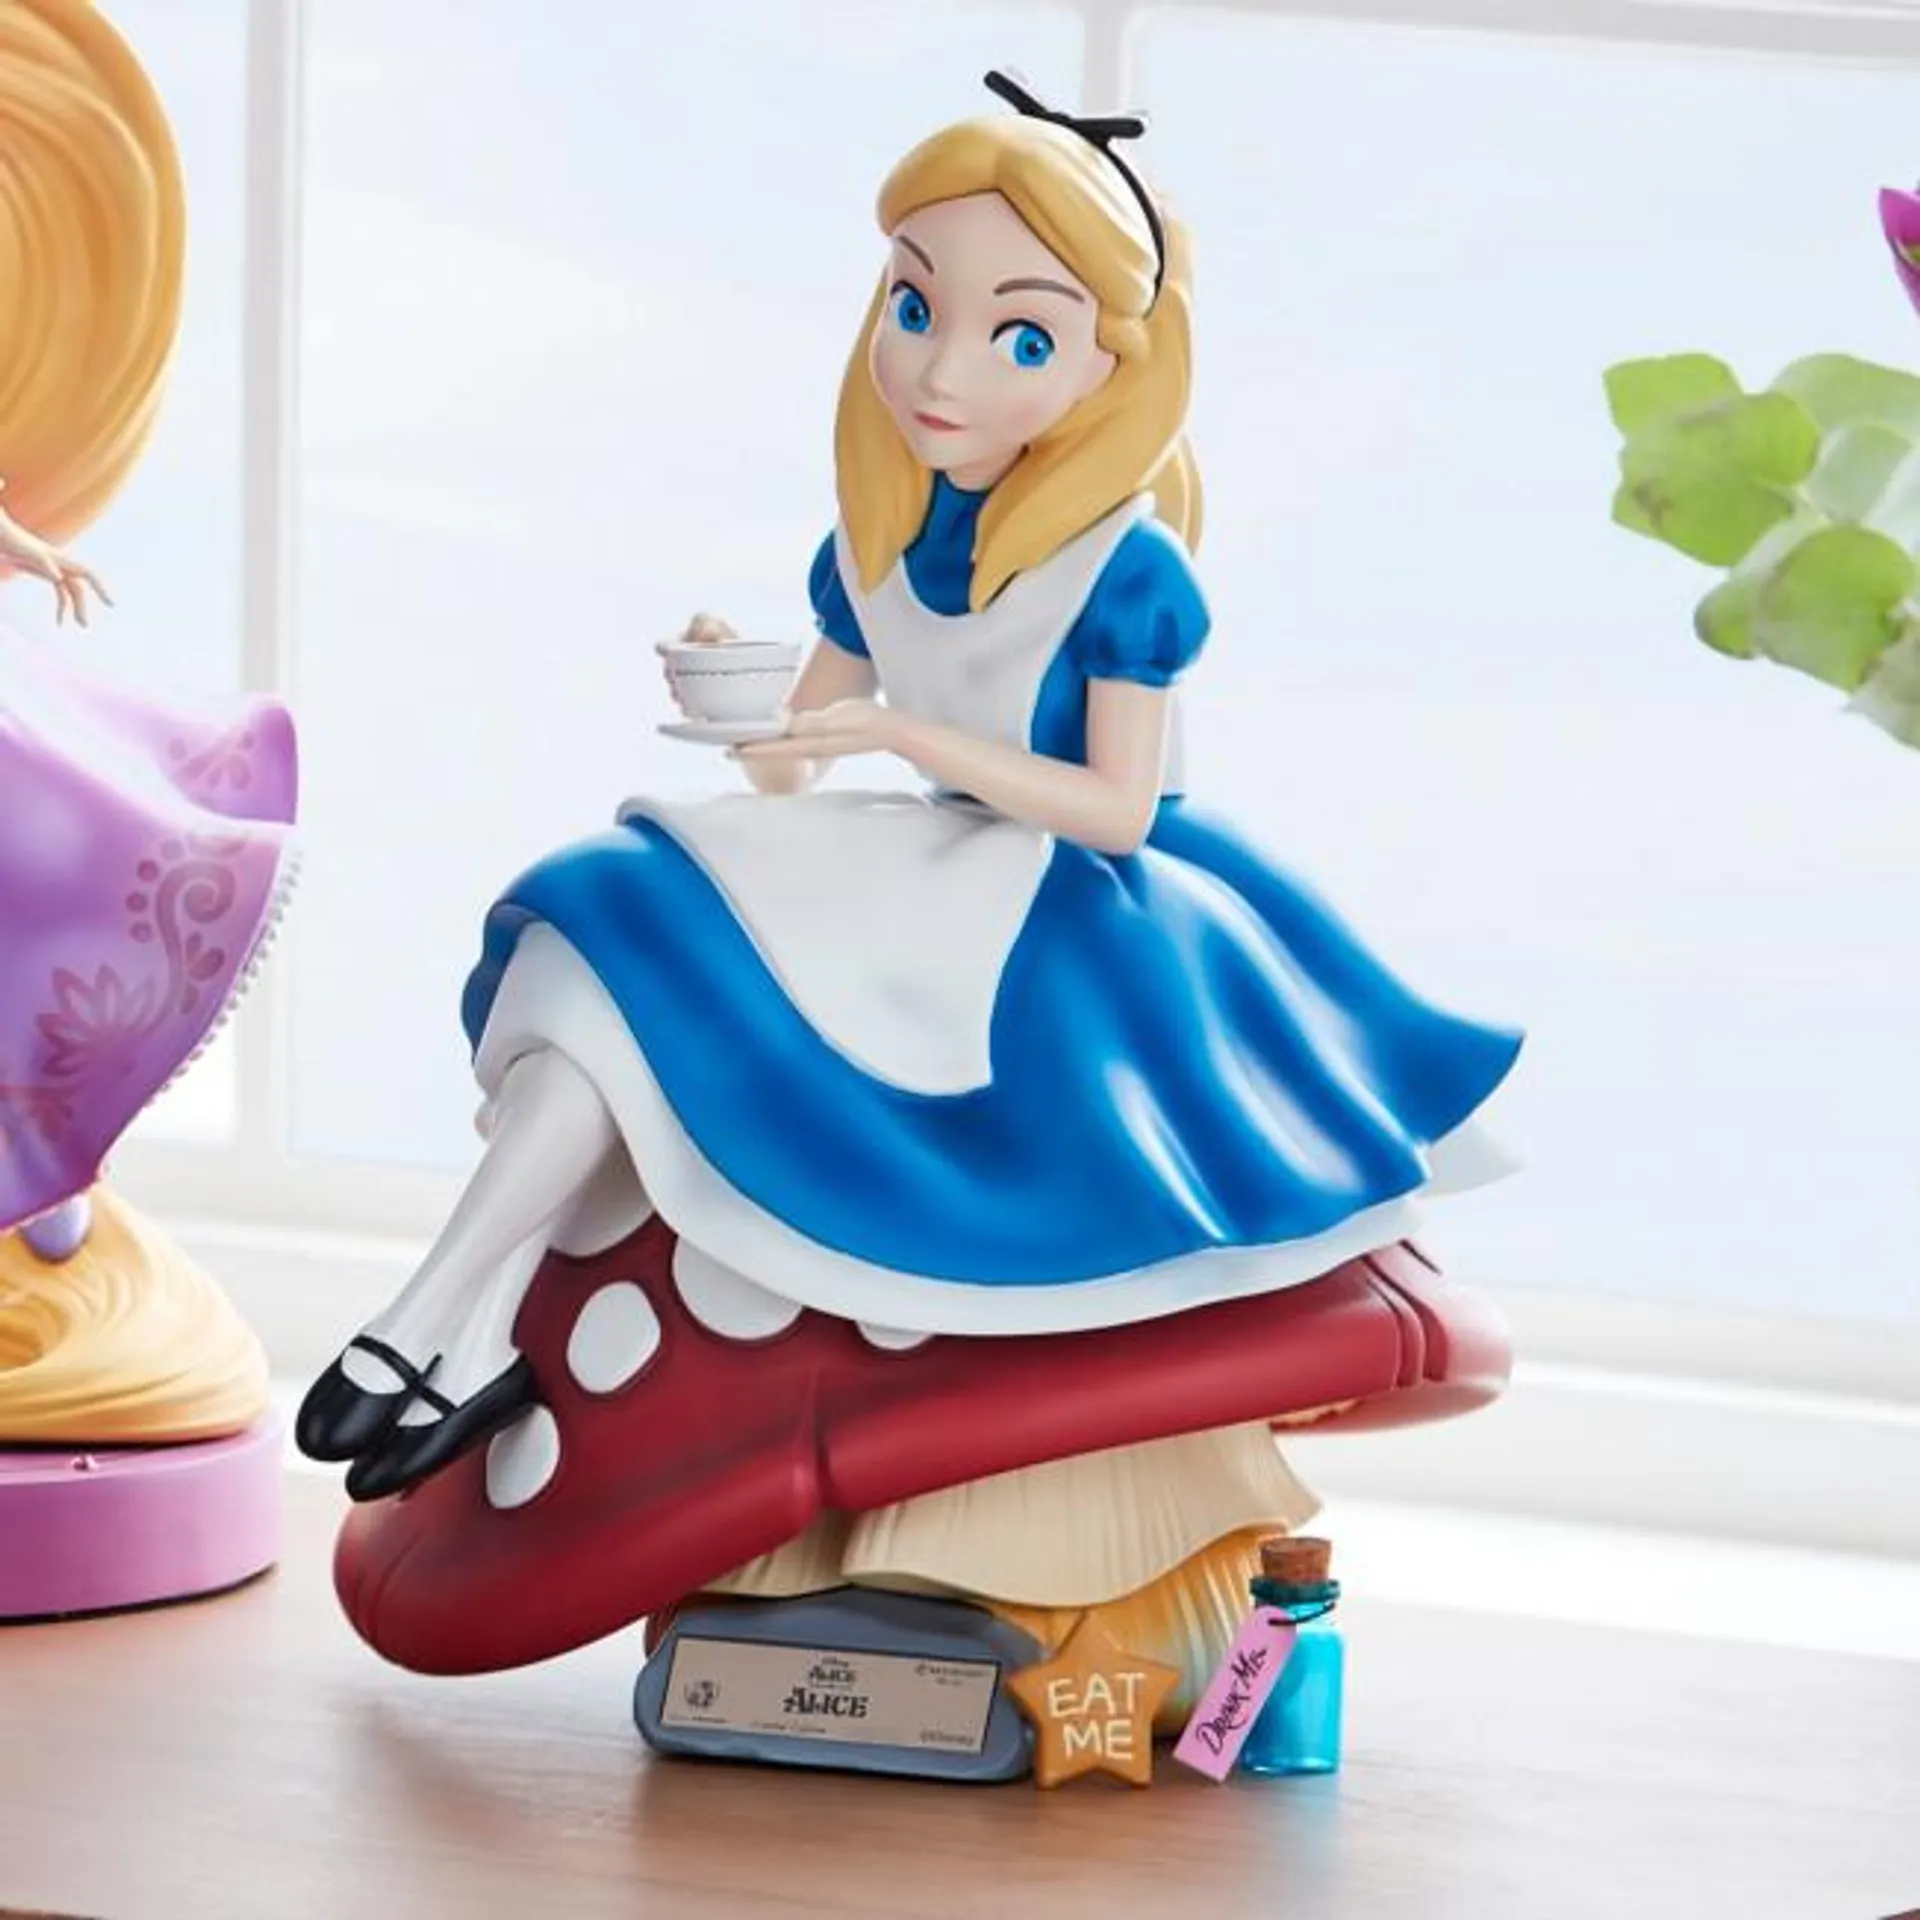 Beast Kingdom Alice in Wonderland Master Craft Limited Edition Figurine